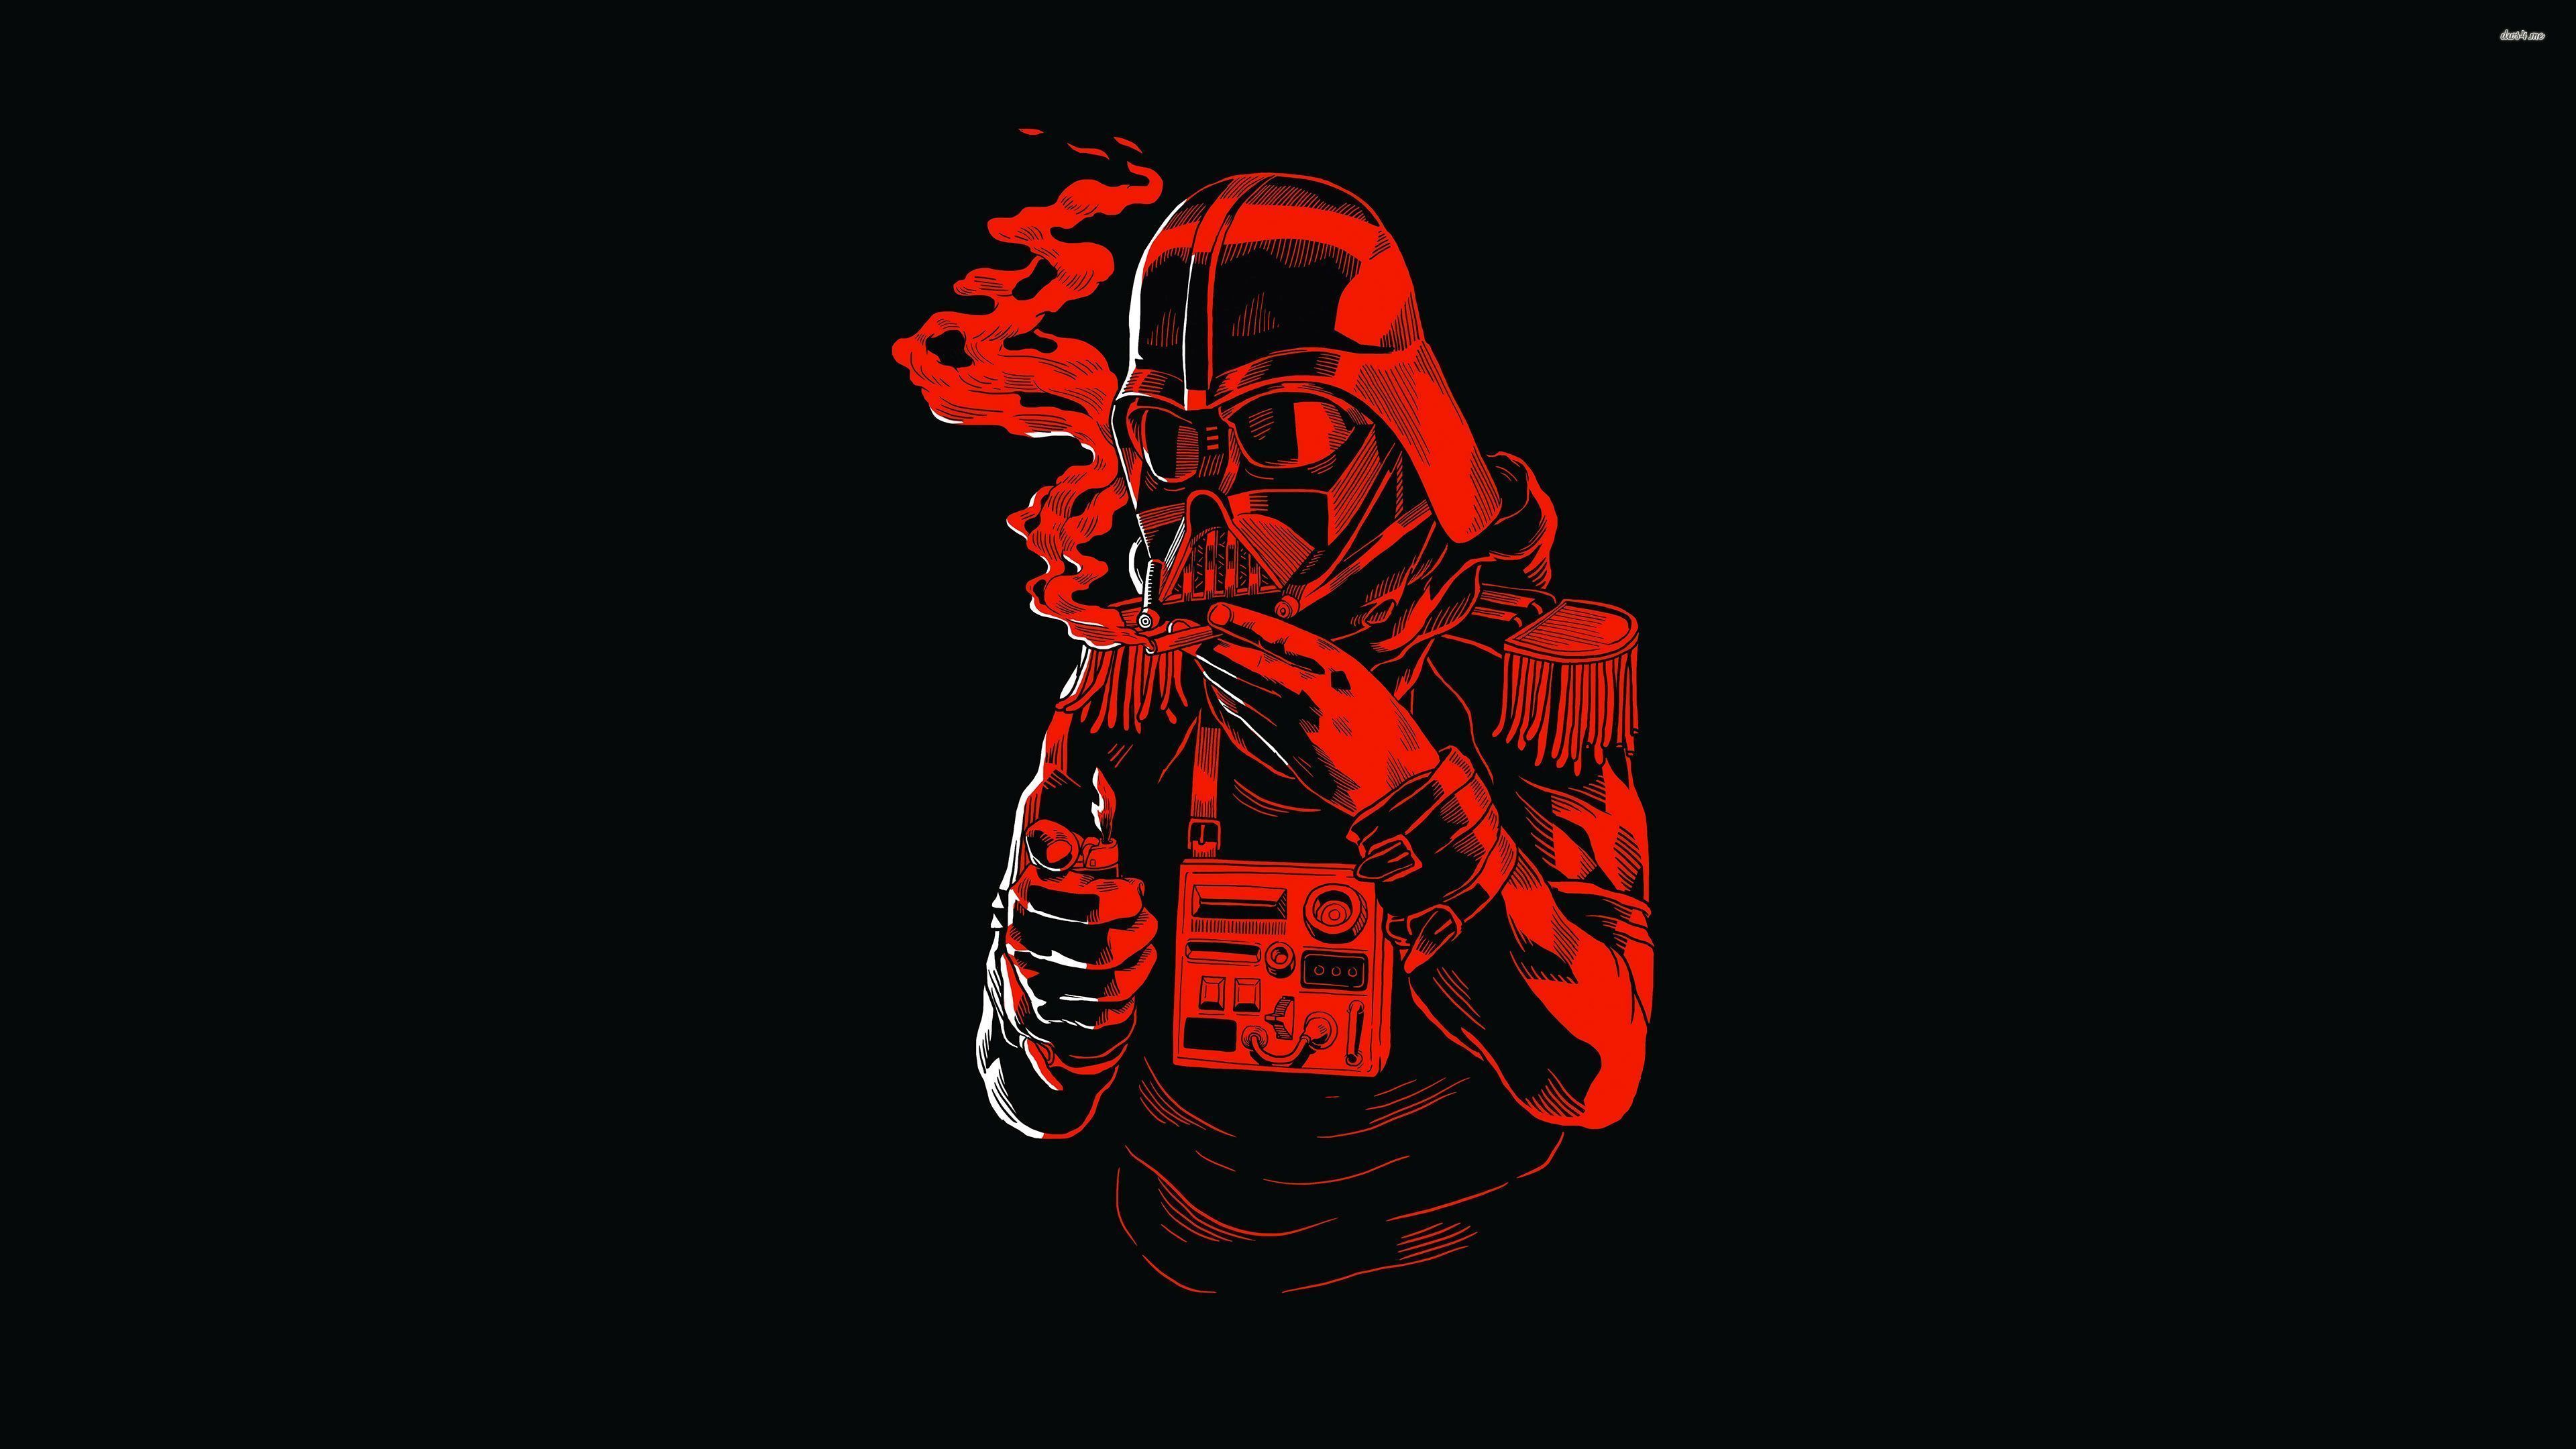 Red Darth Vader smoking wallpaper - Movie wallpapers - #44694